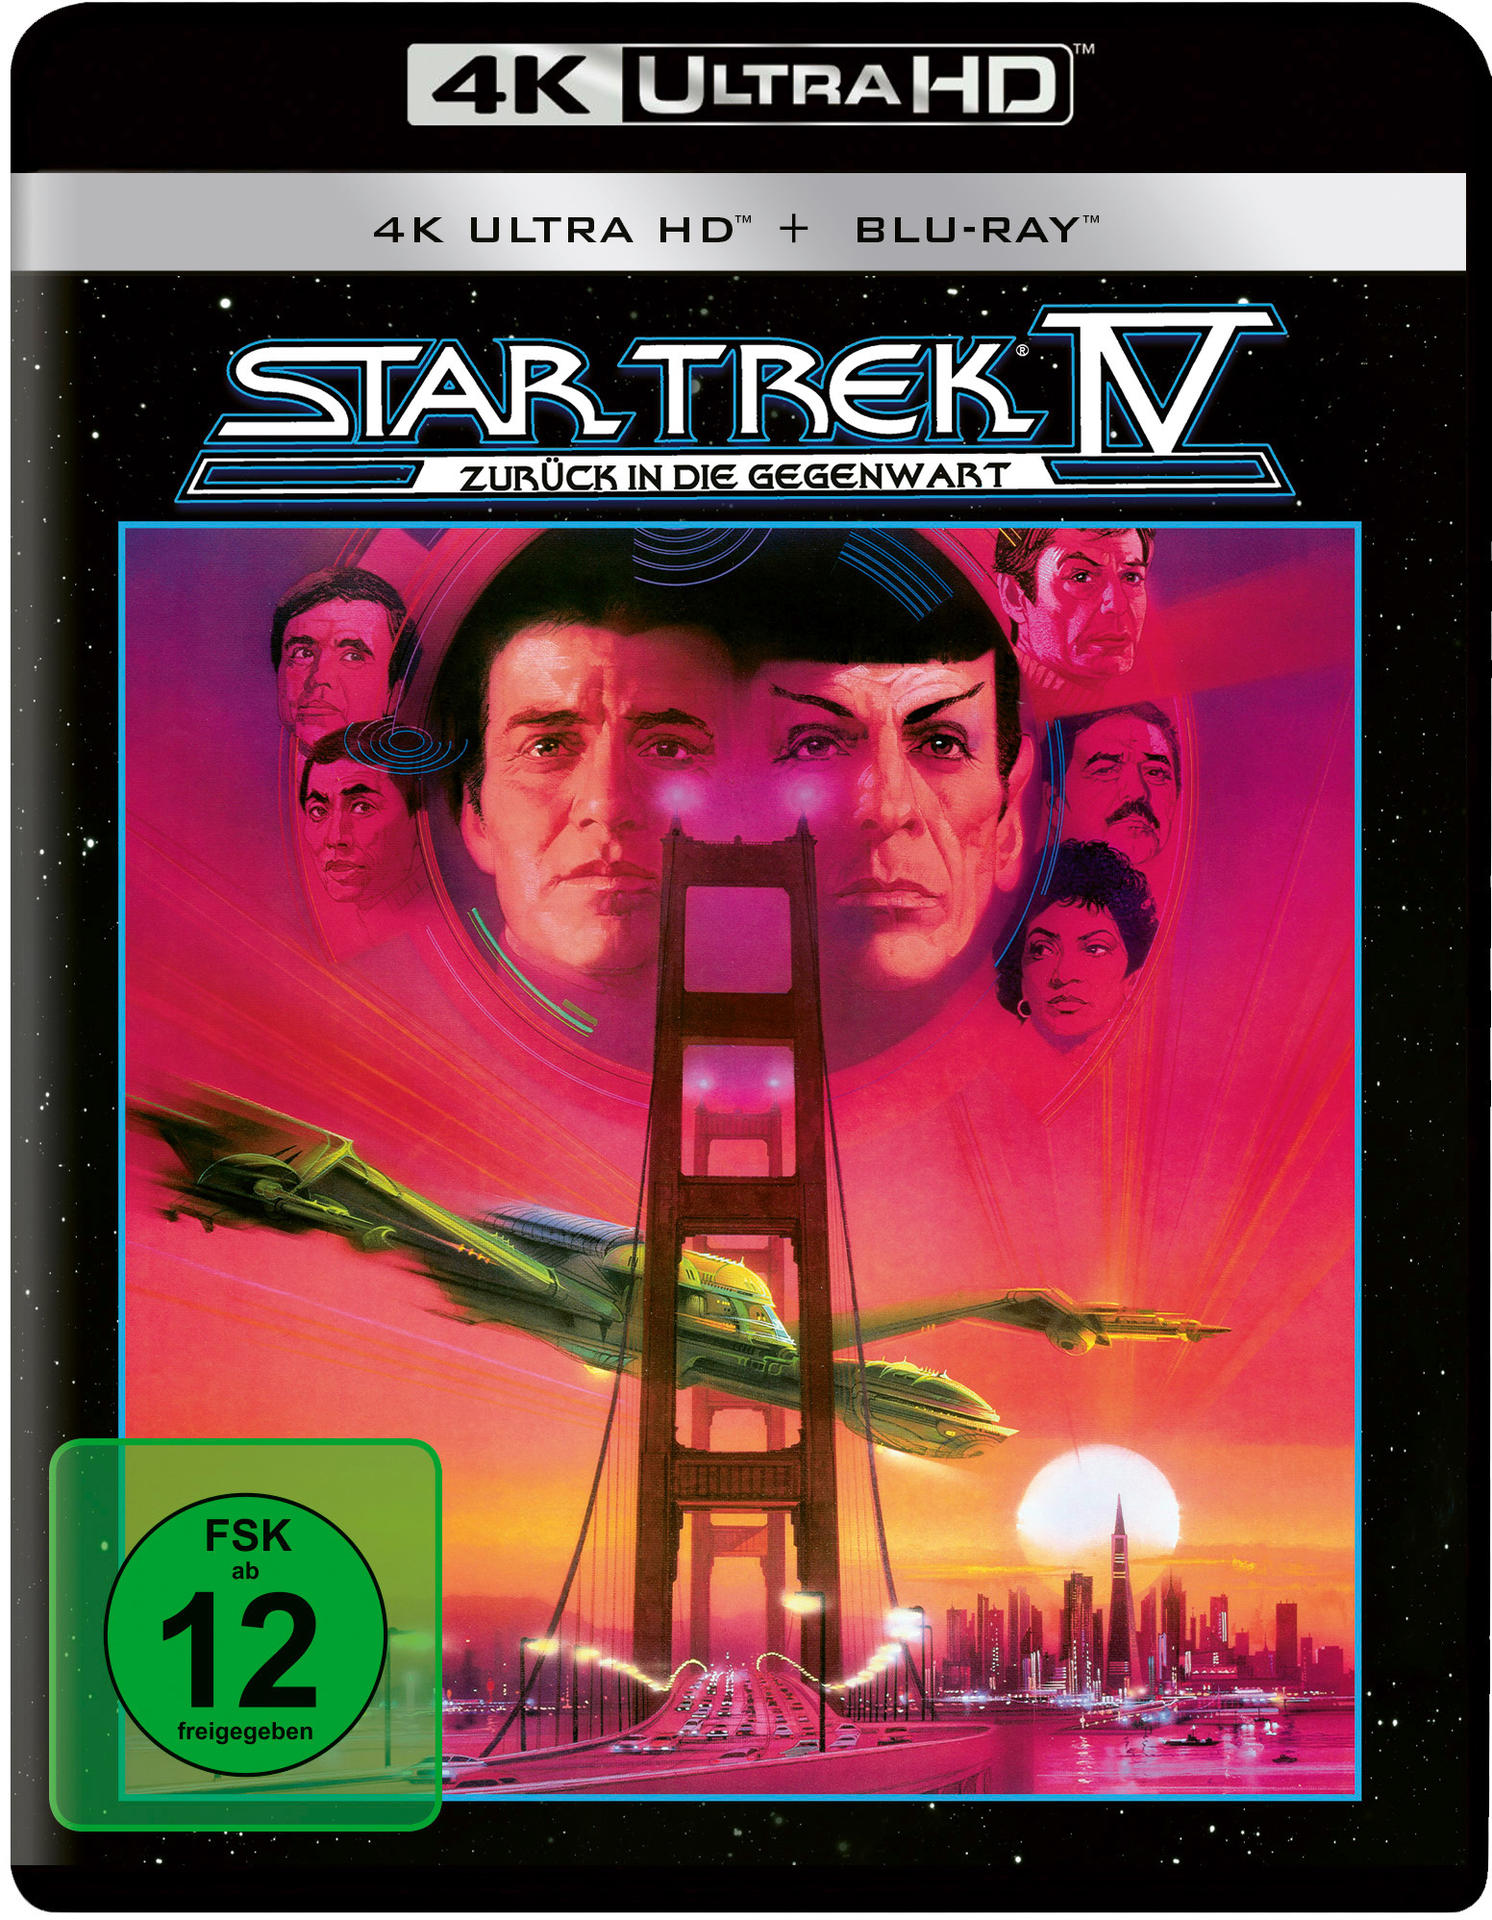 Blu-ray die Gegenwart Trek + Ultra in IV Blu-ray 4K - Star HD Zurück